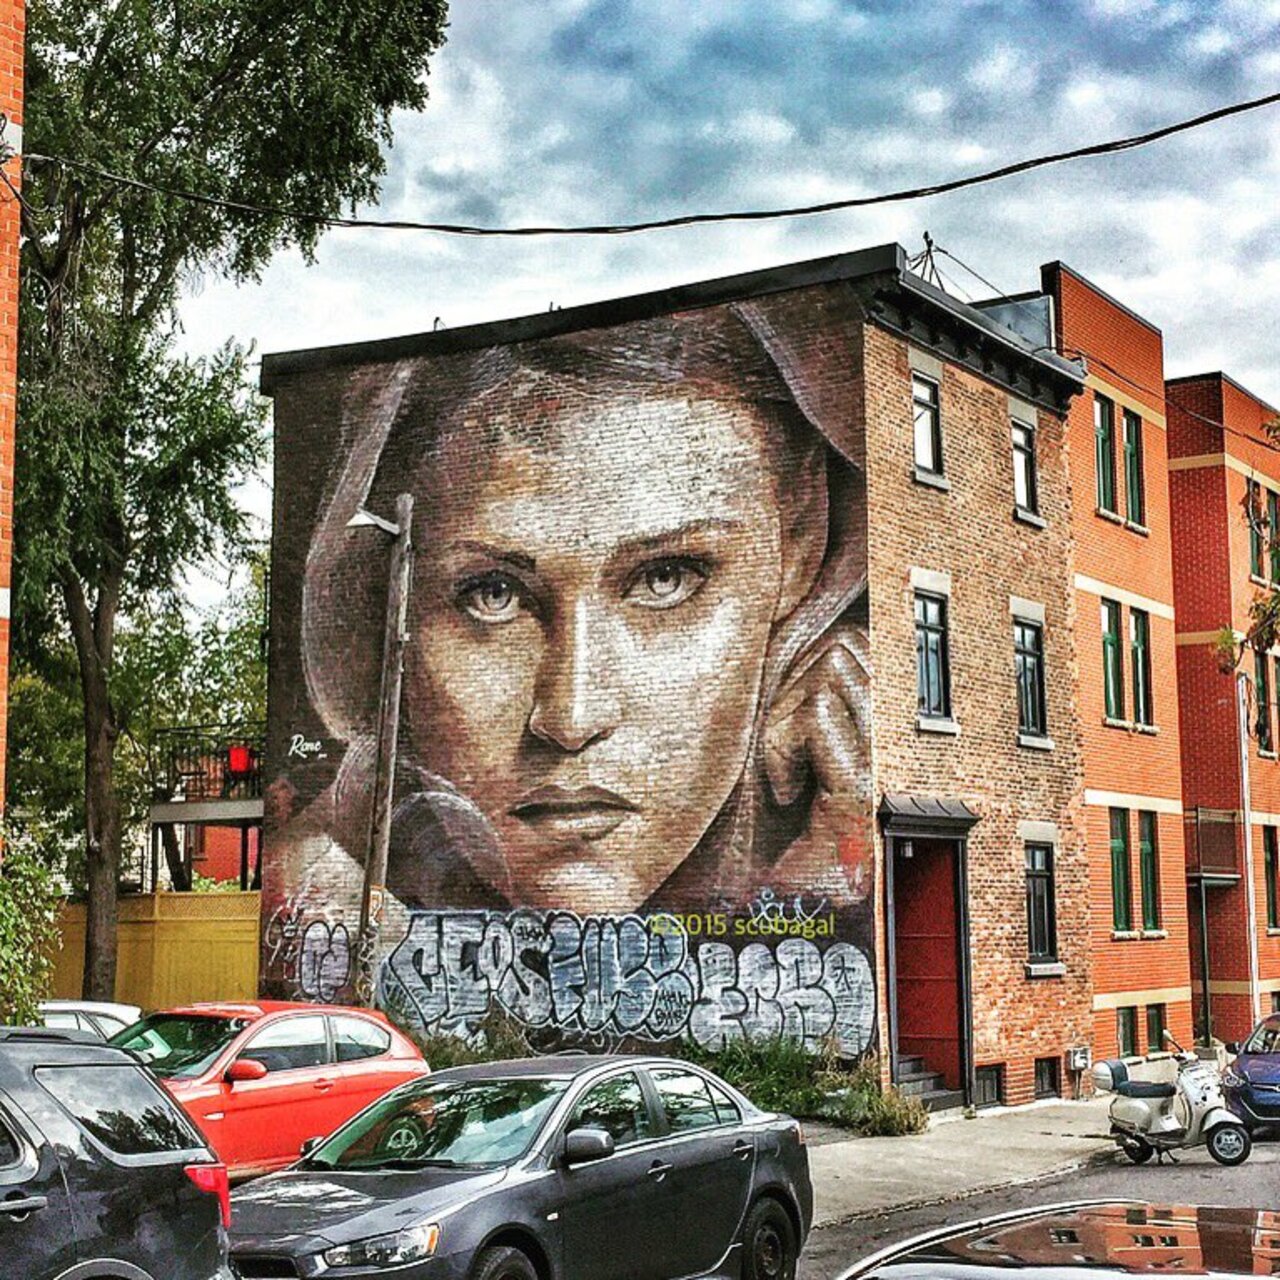 RT @RelaxInCanada: ThisScubaGal: The Walkflower | #Montreal #art #graffiti #streetart #streetphotography https://t.co/Tzvpn1r0Ea